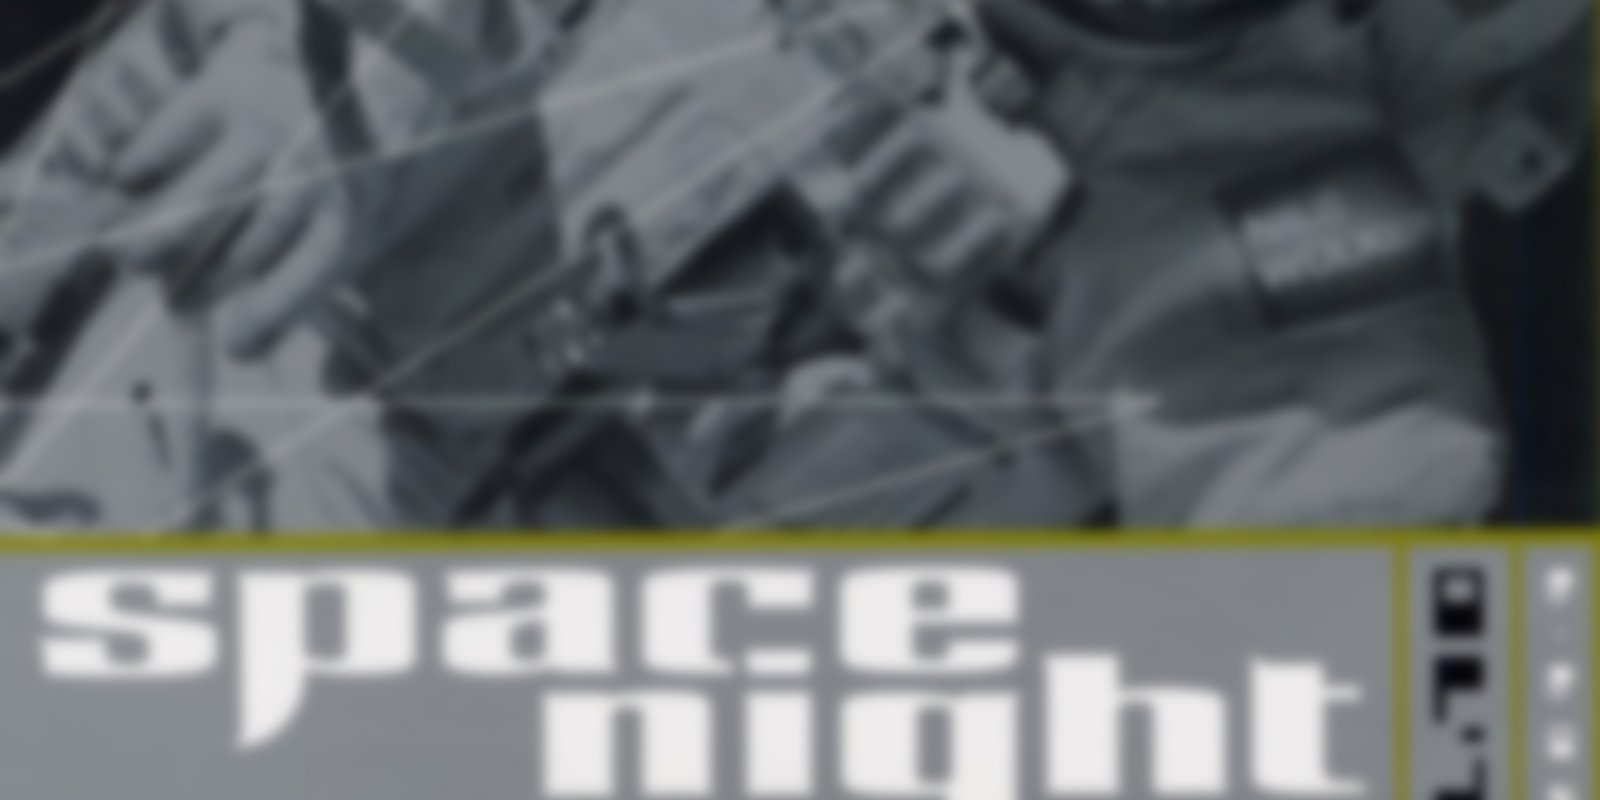 Space Night - Volume 10